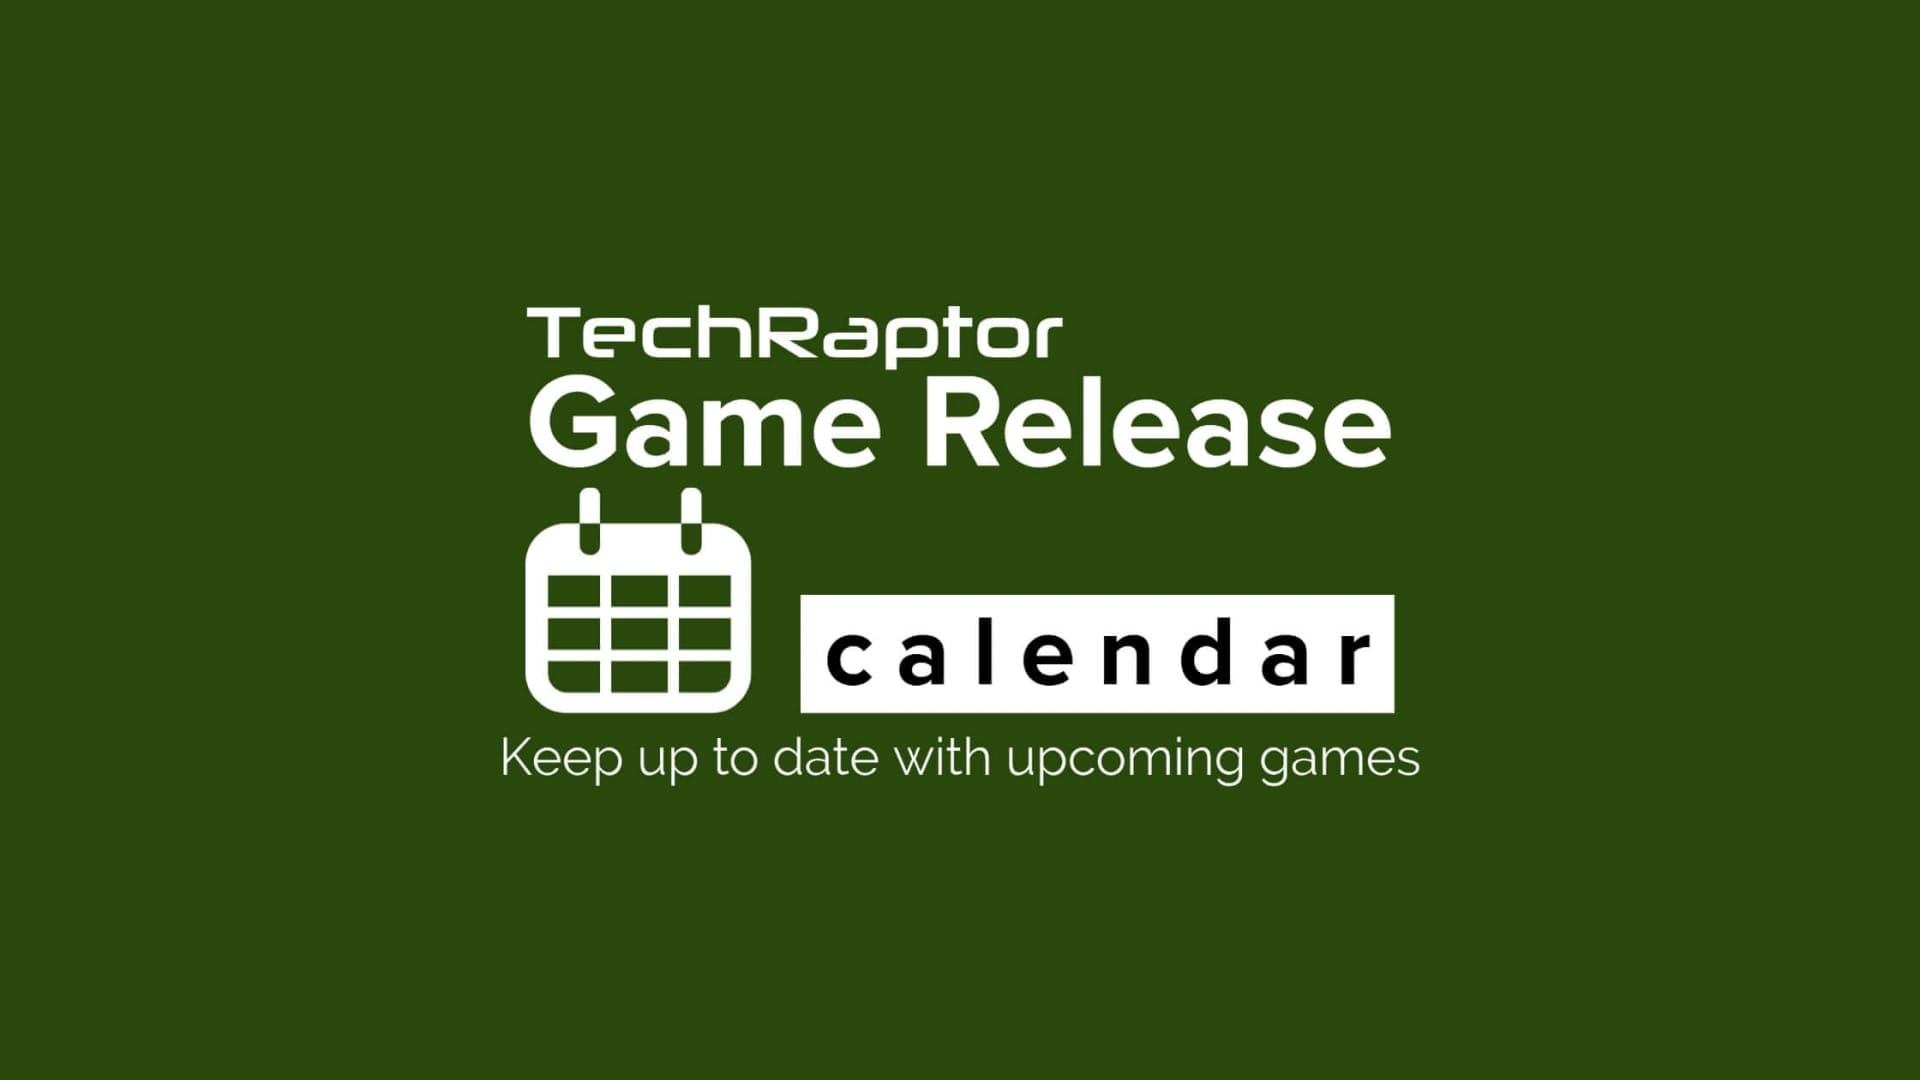 Introducing the Game Release Calendar TechRaptor